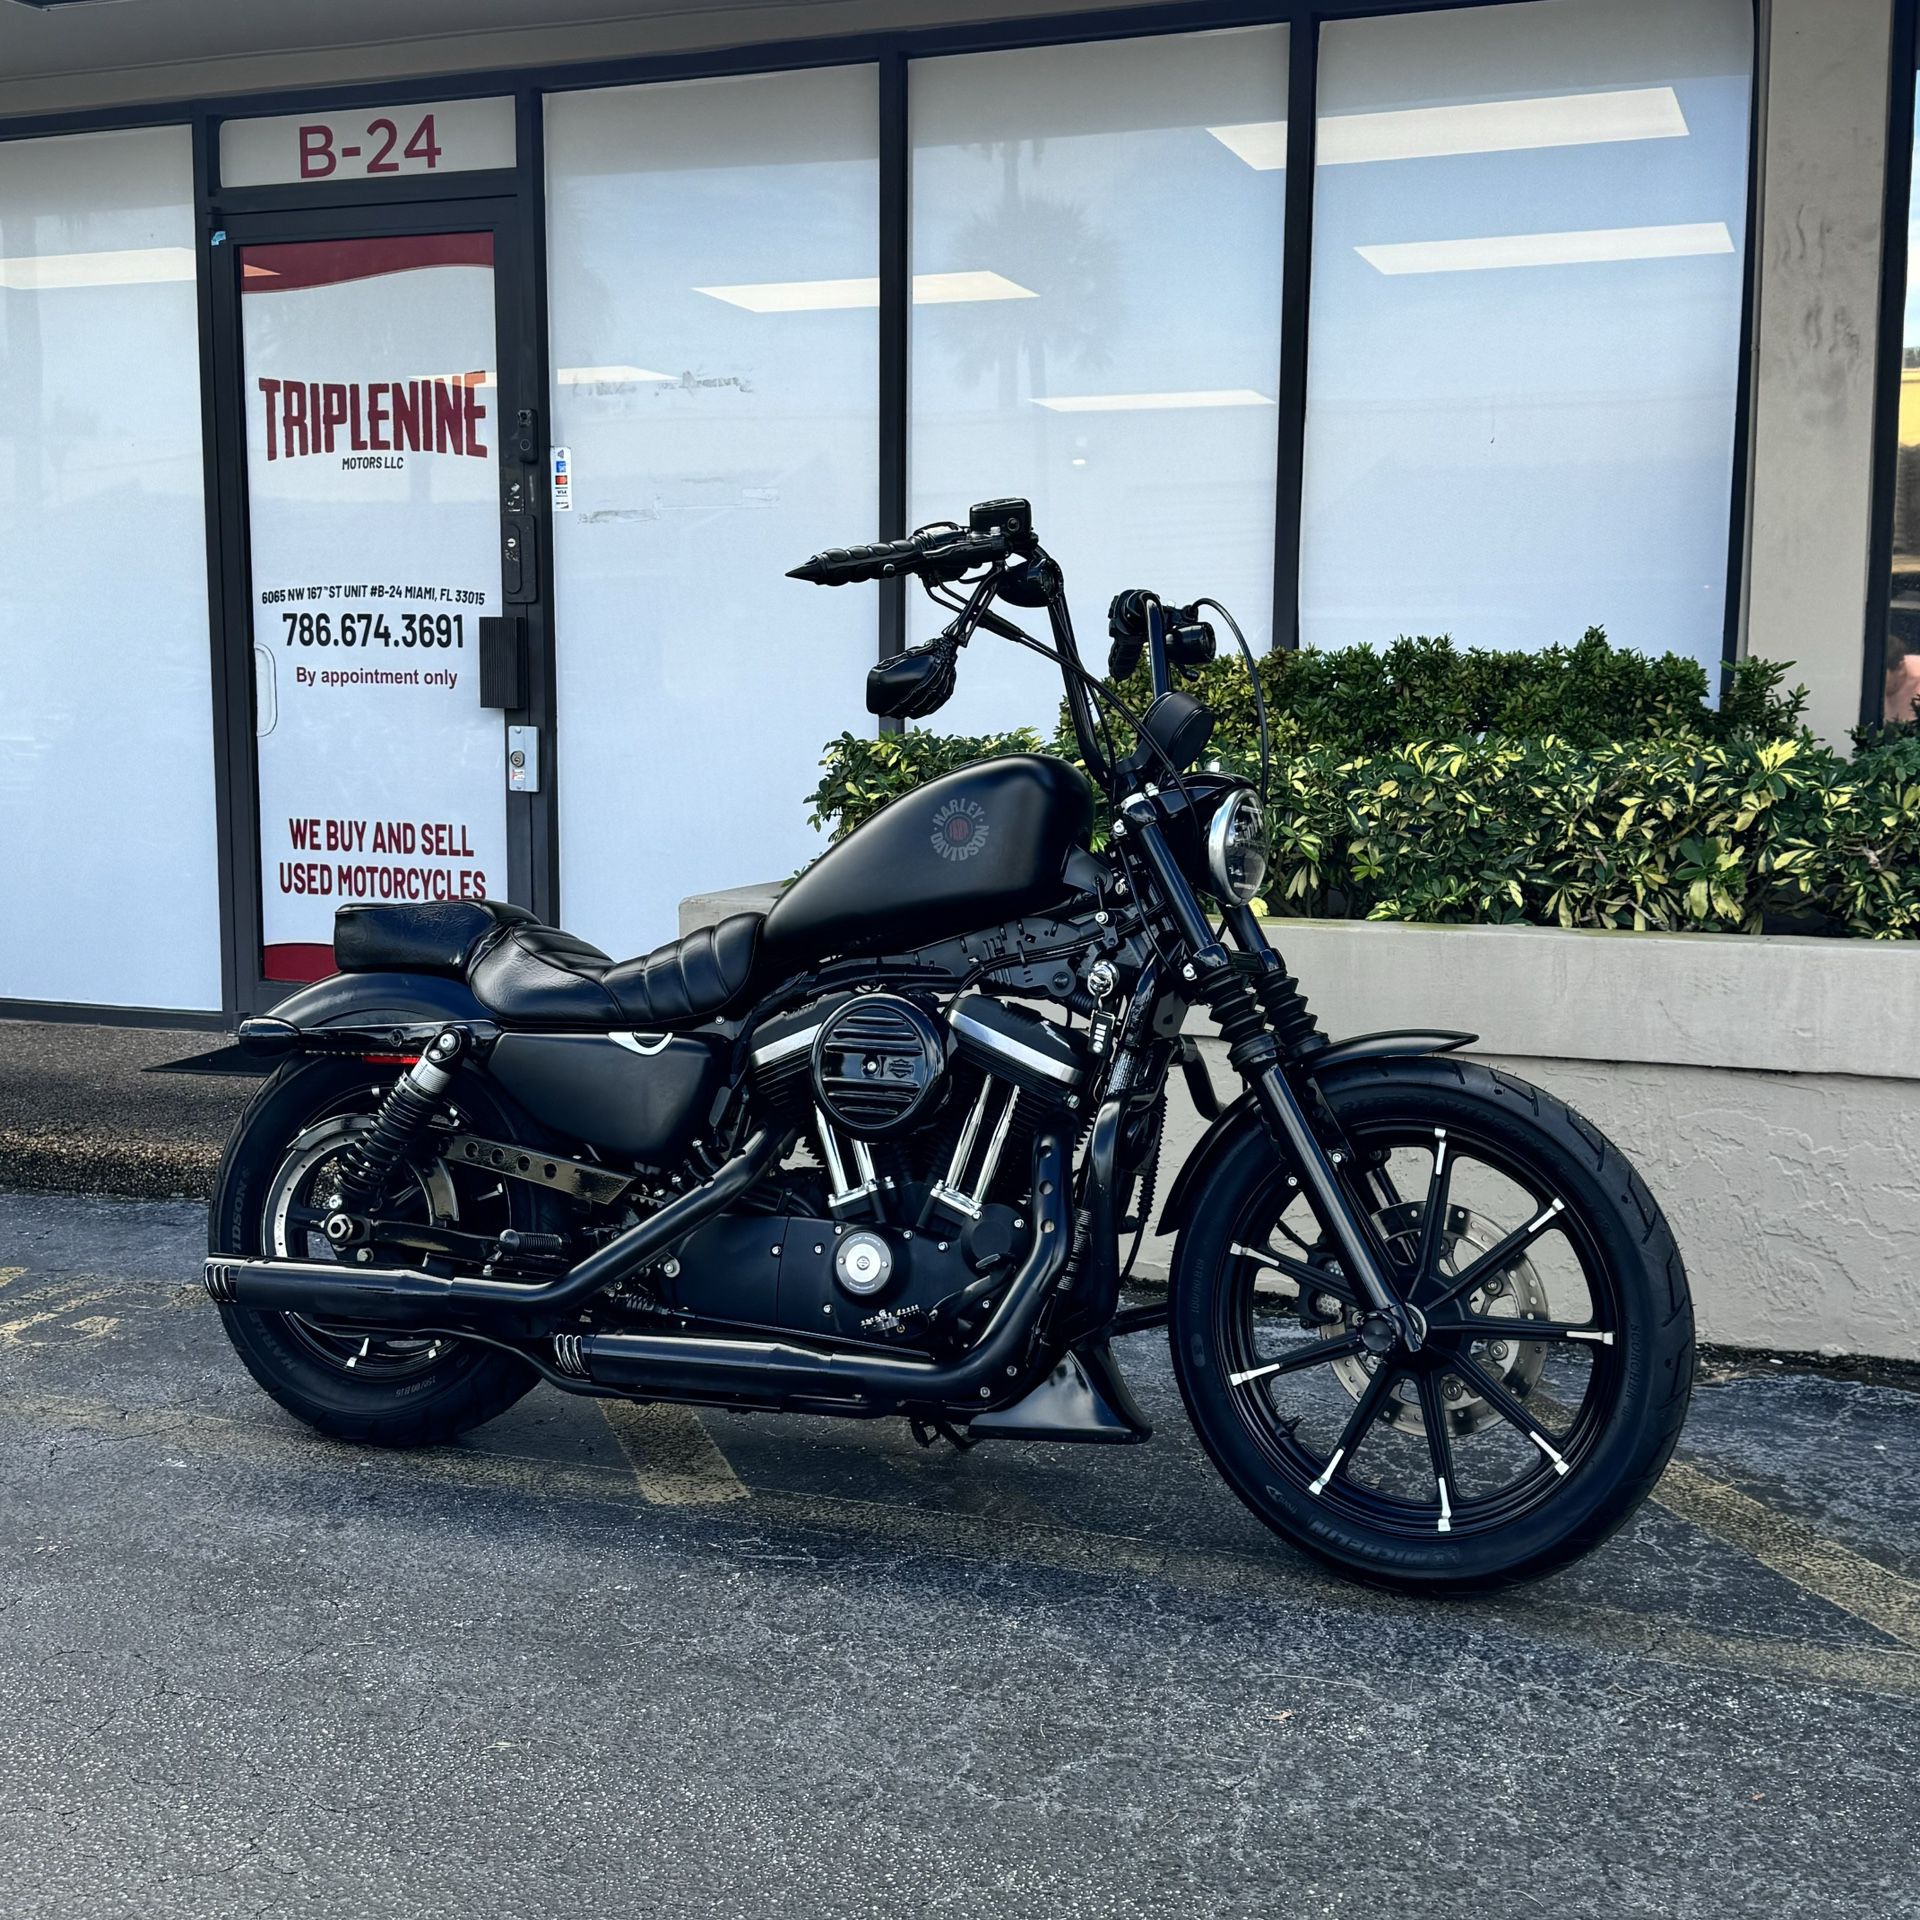 2020 Harley davidson Iron 883